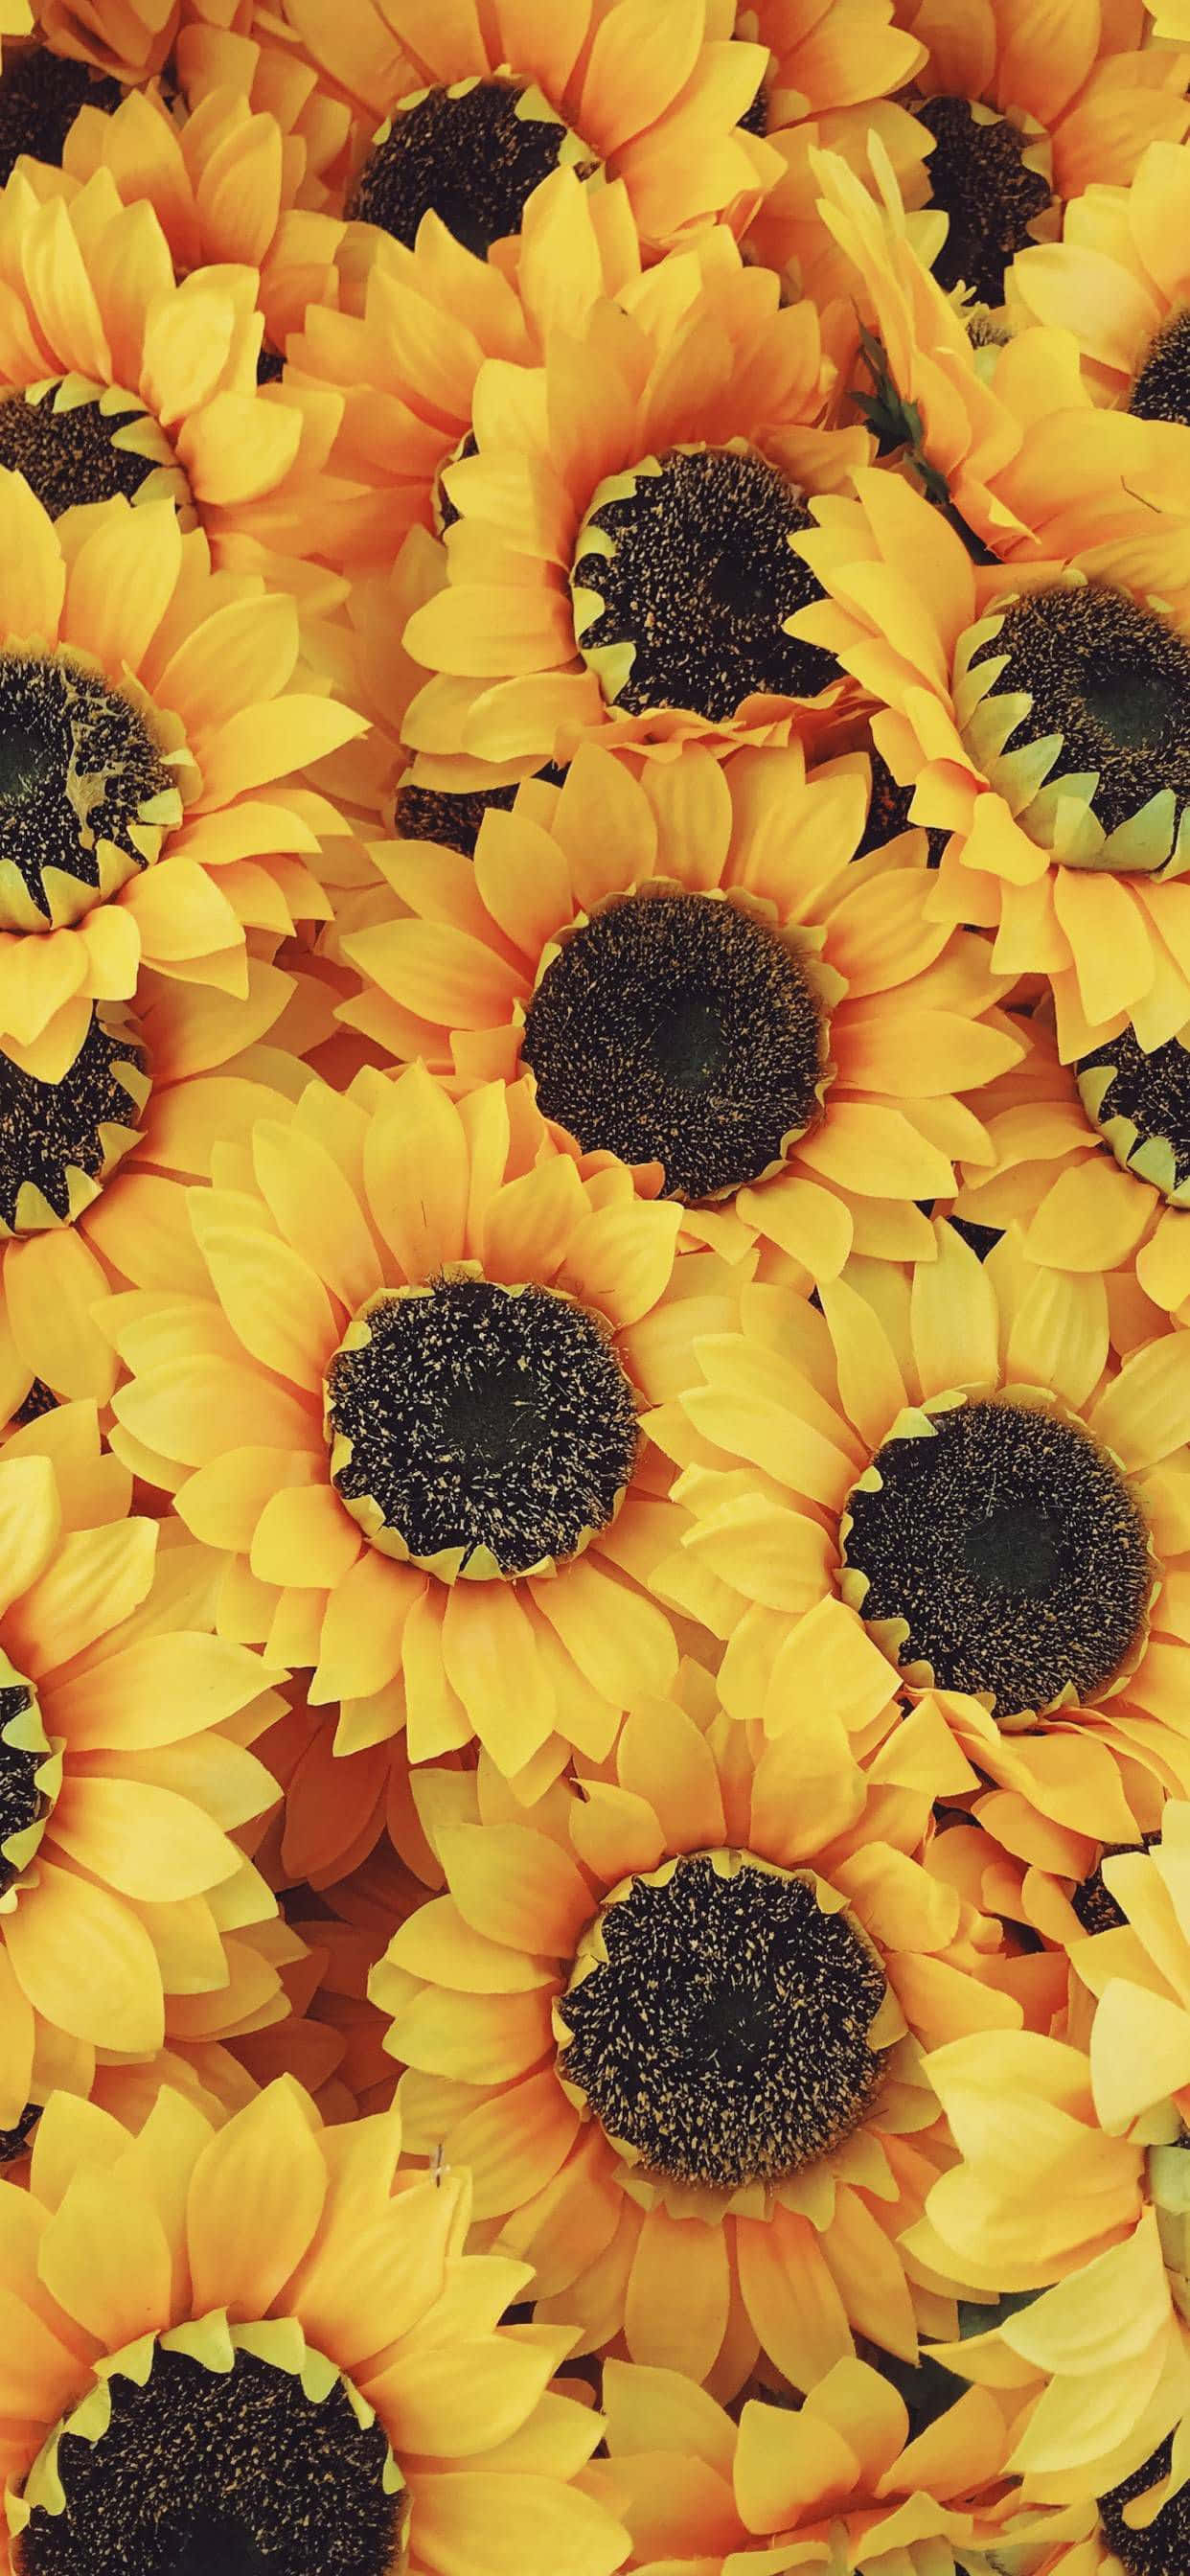 Download Sunflower Aesthetic Iphone Wallpaper 8059